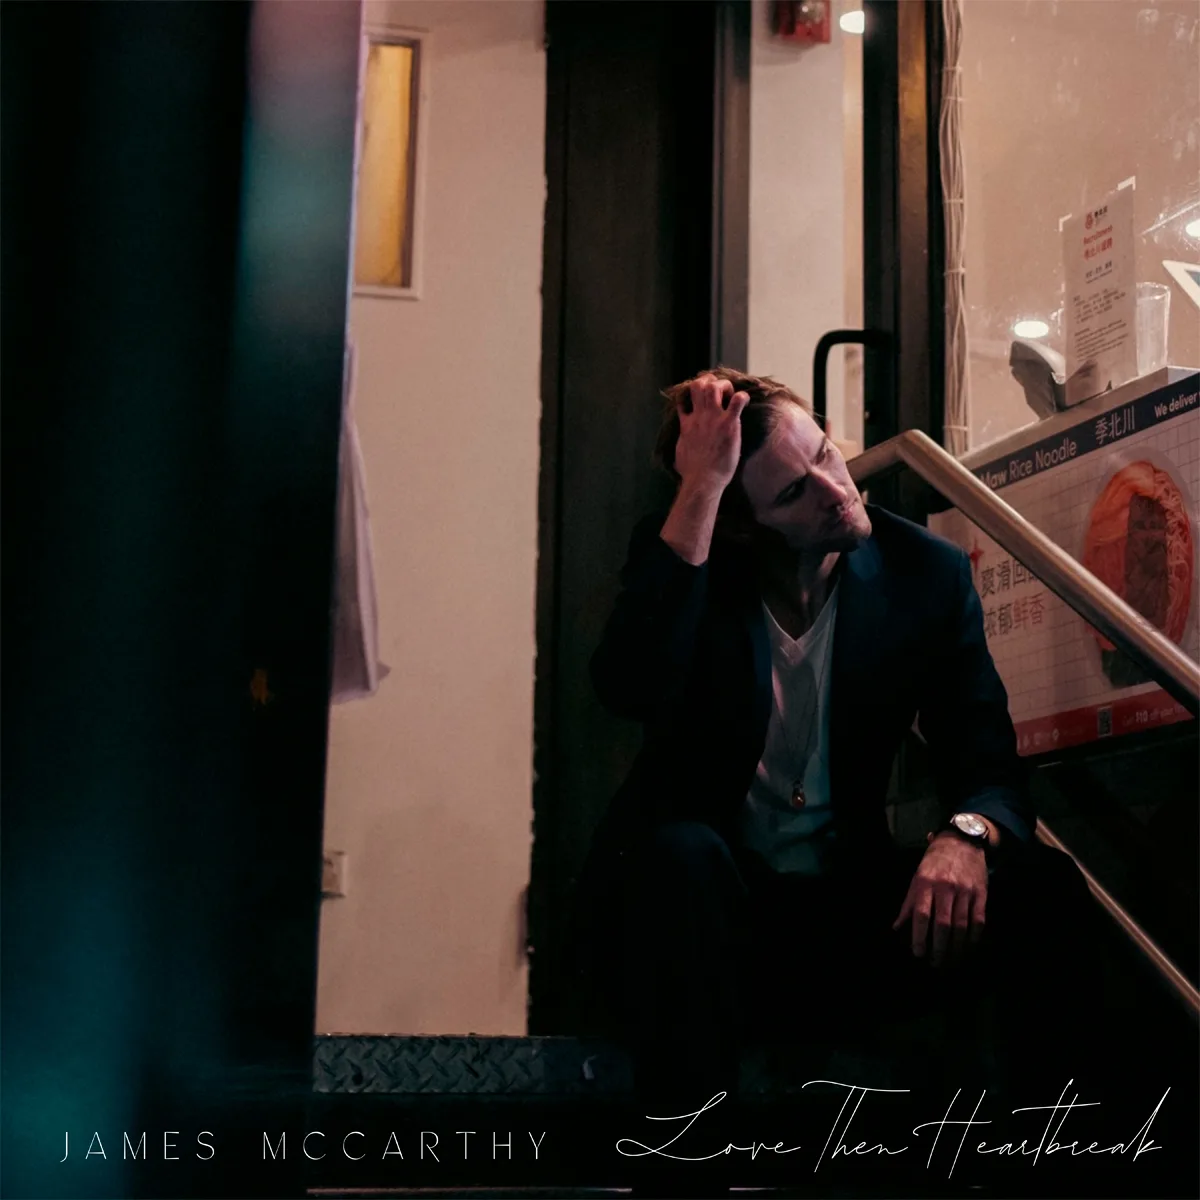 JAMES McCARTHY / "Love Then Heartbreak"